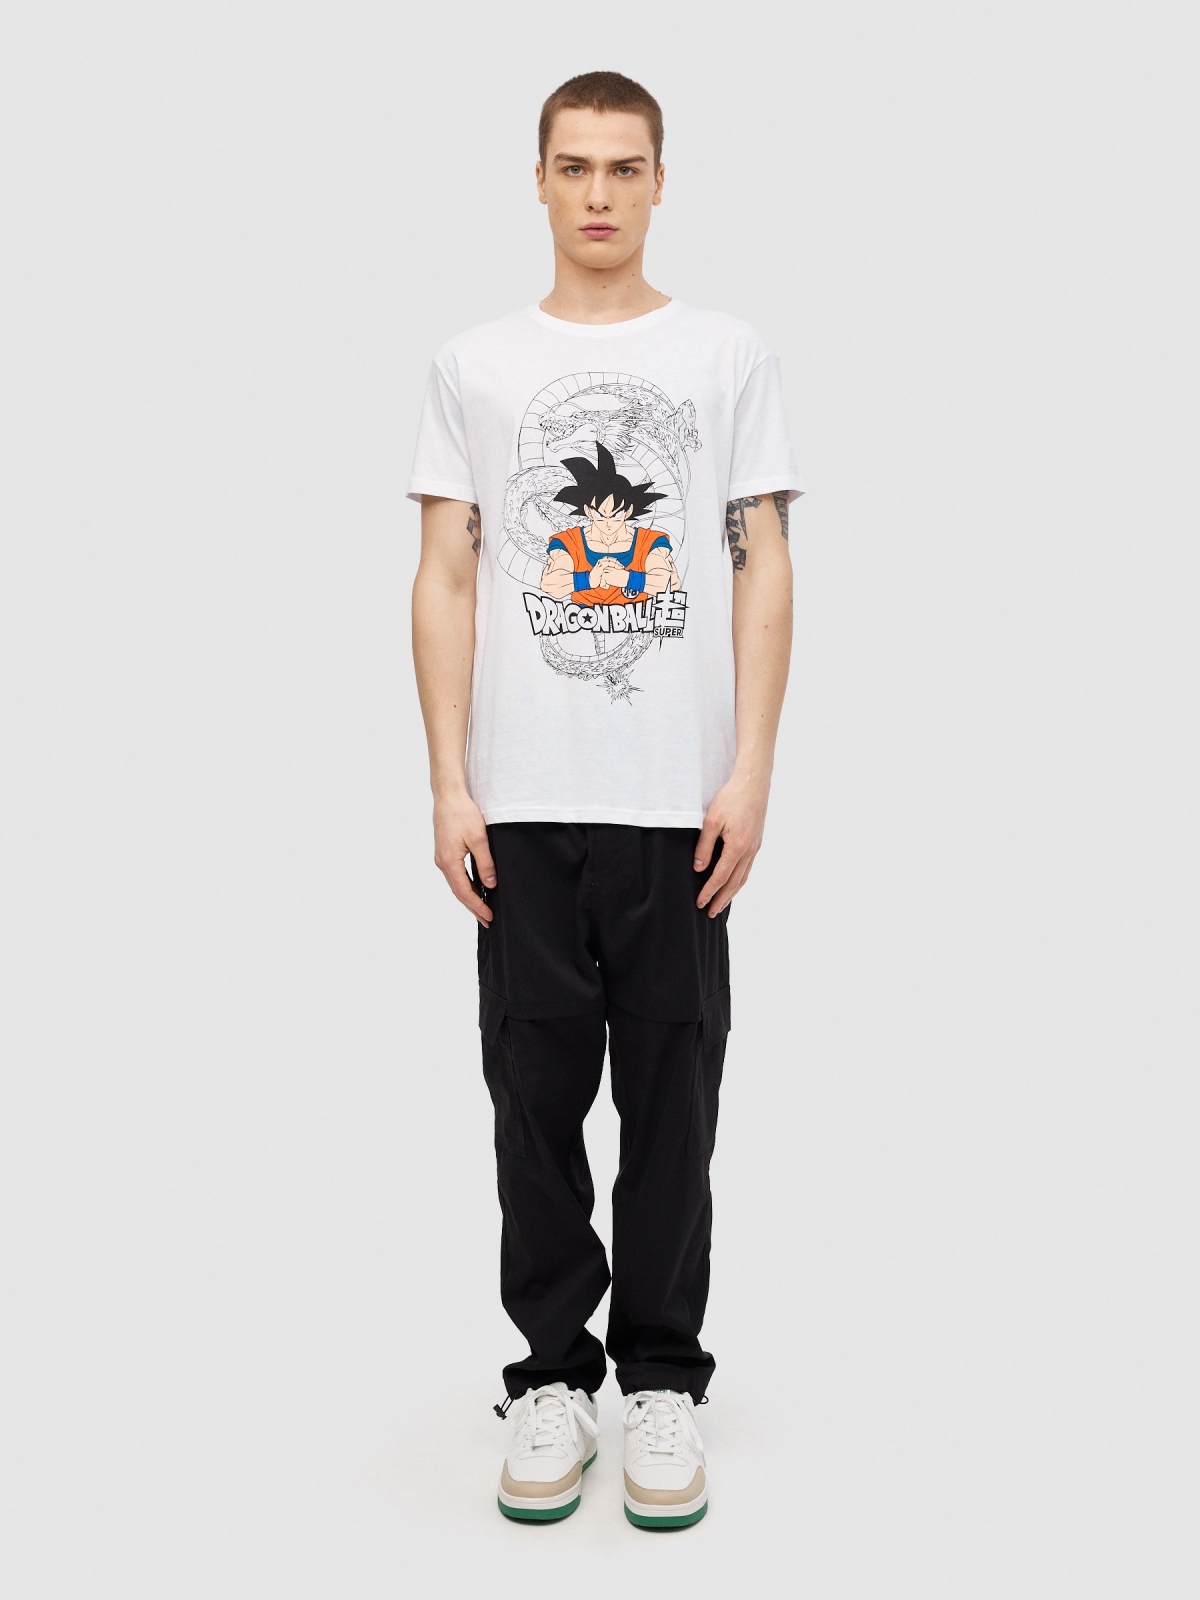 Dragon Ball Super t-shirt white front view